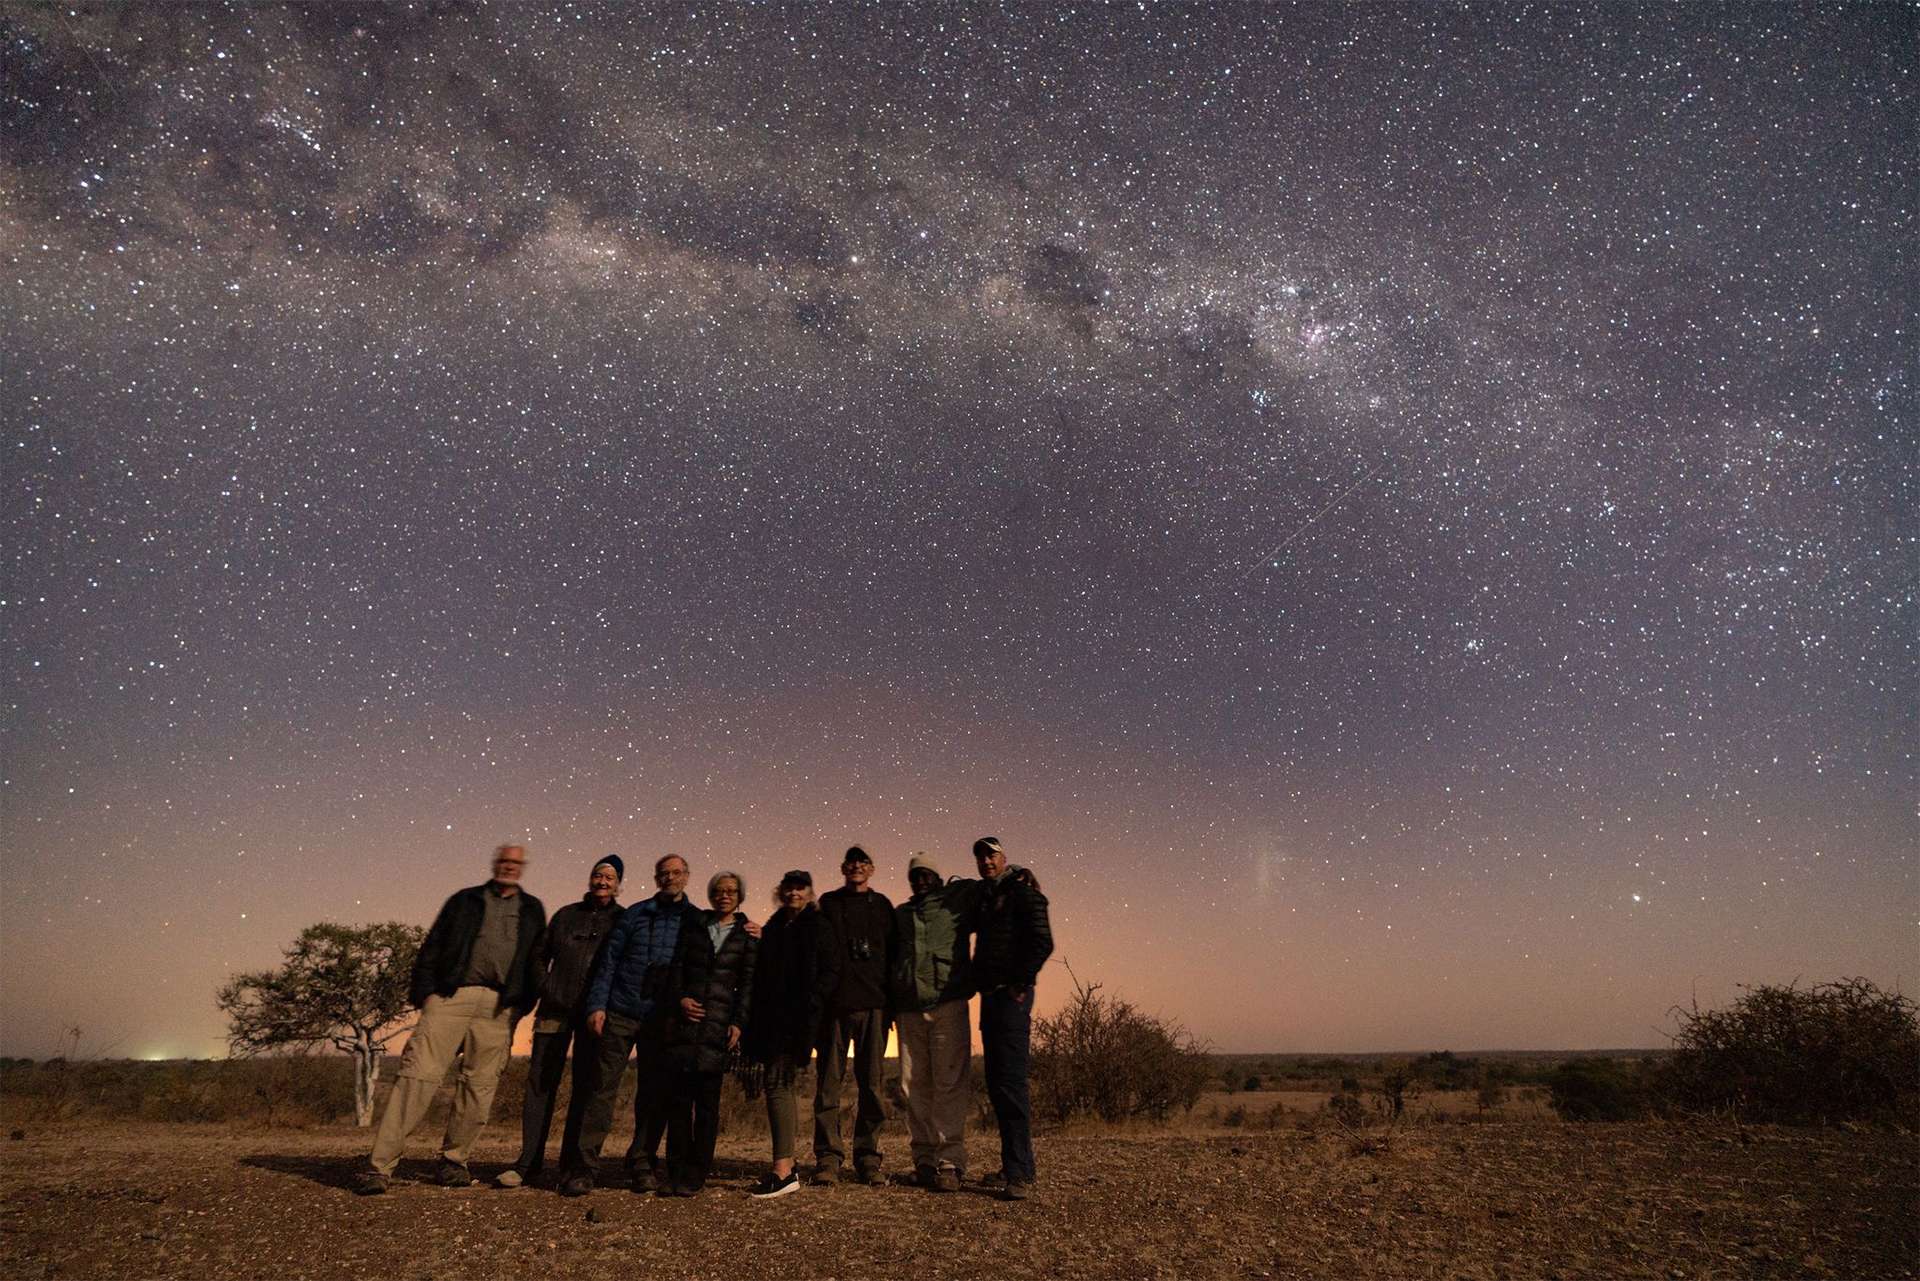 Safari night bush walk under the Milky Way stars south africa